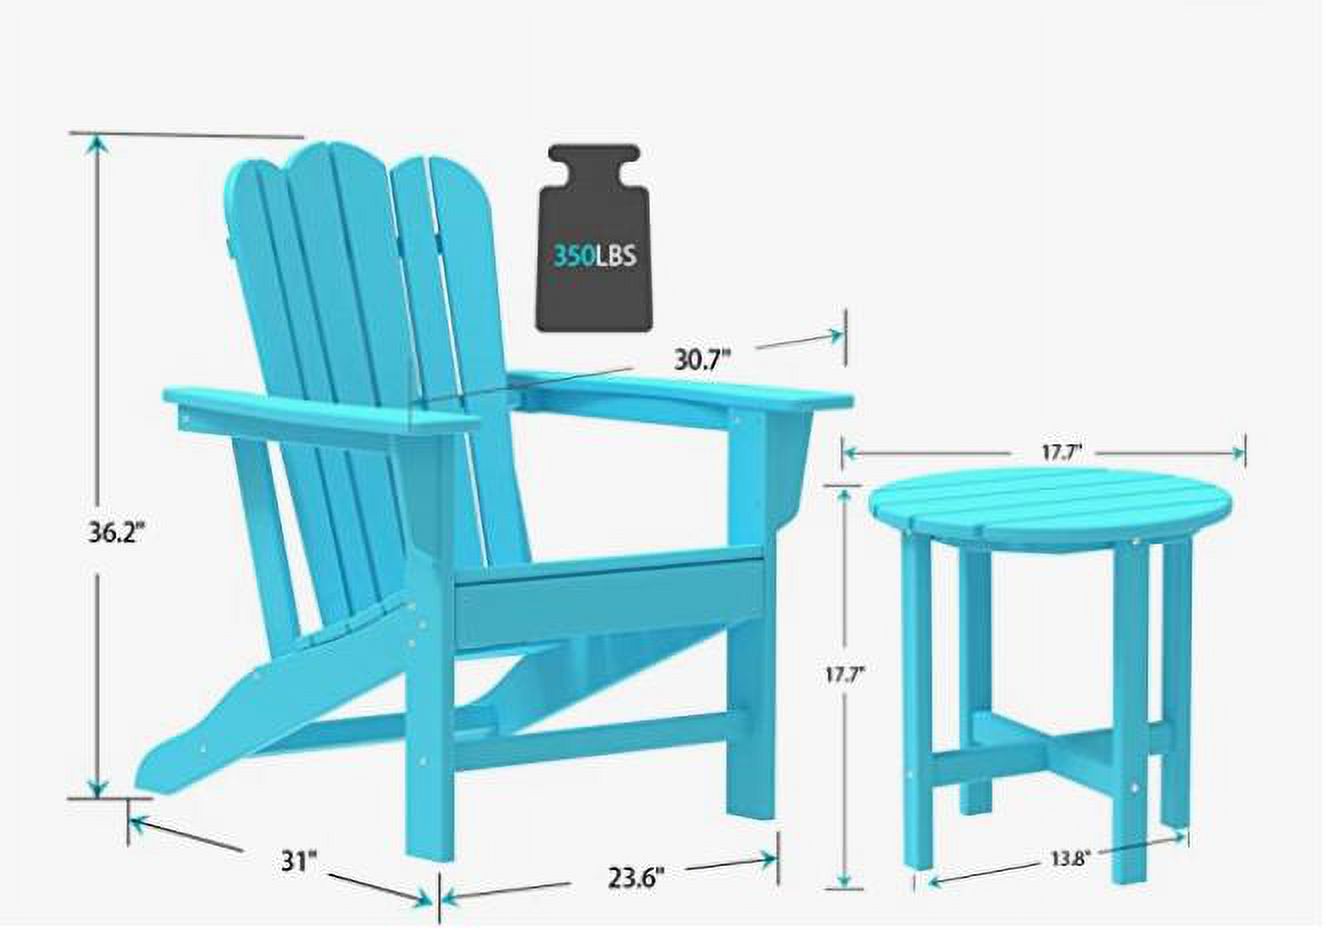 UBesGoo 2 Plastic Adirondack Chairs Outdoor Side Table. Outdoor Adirondack Chair Patio Lounge Chairs Classic Design (Blue) - image 2 of 4